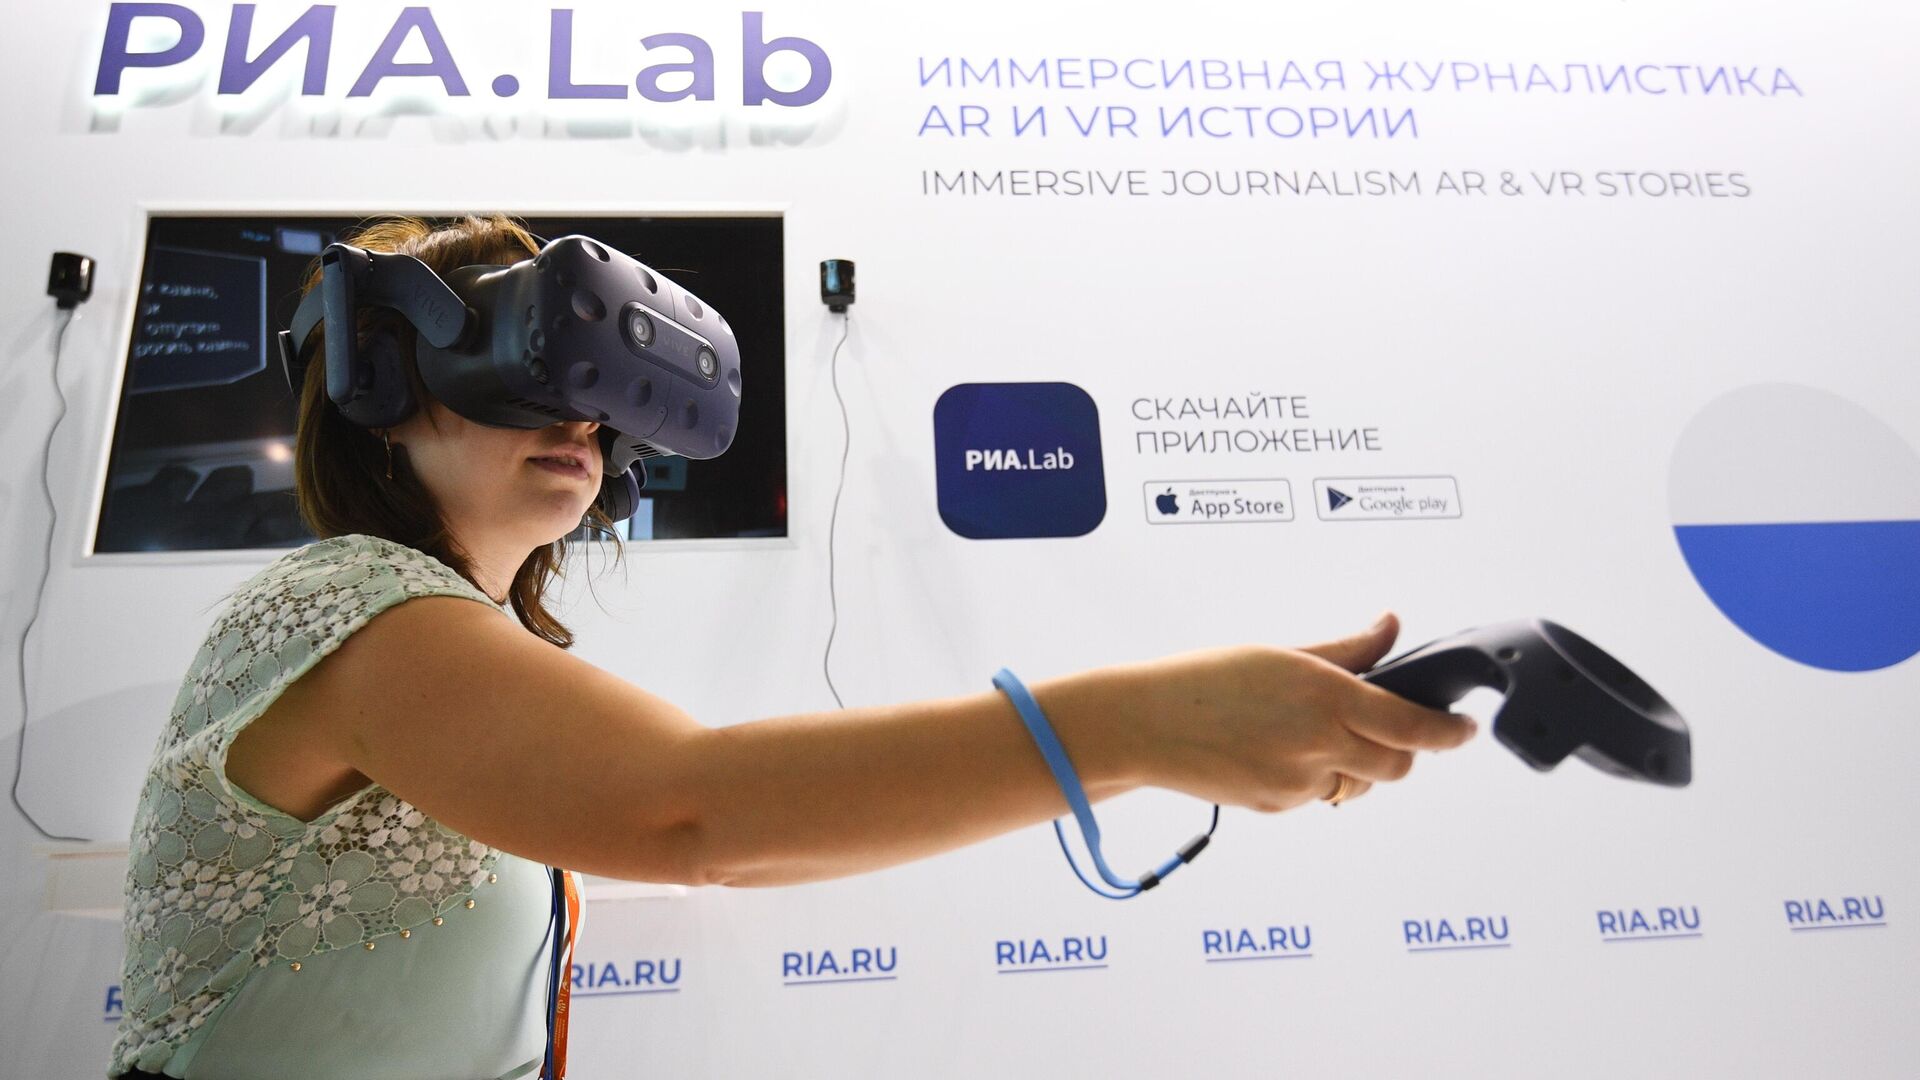 Девушка тестирует VR-очки в презентационной зоне РИА.Lab на стенде МИА Россия сегодня на ВДНХ в Москве - РИА Новости, 1920, 12.02.2021